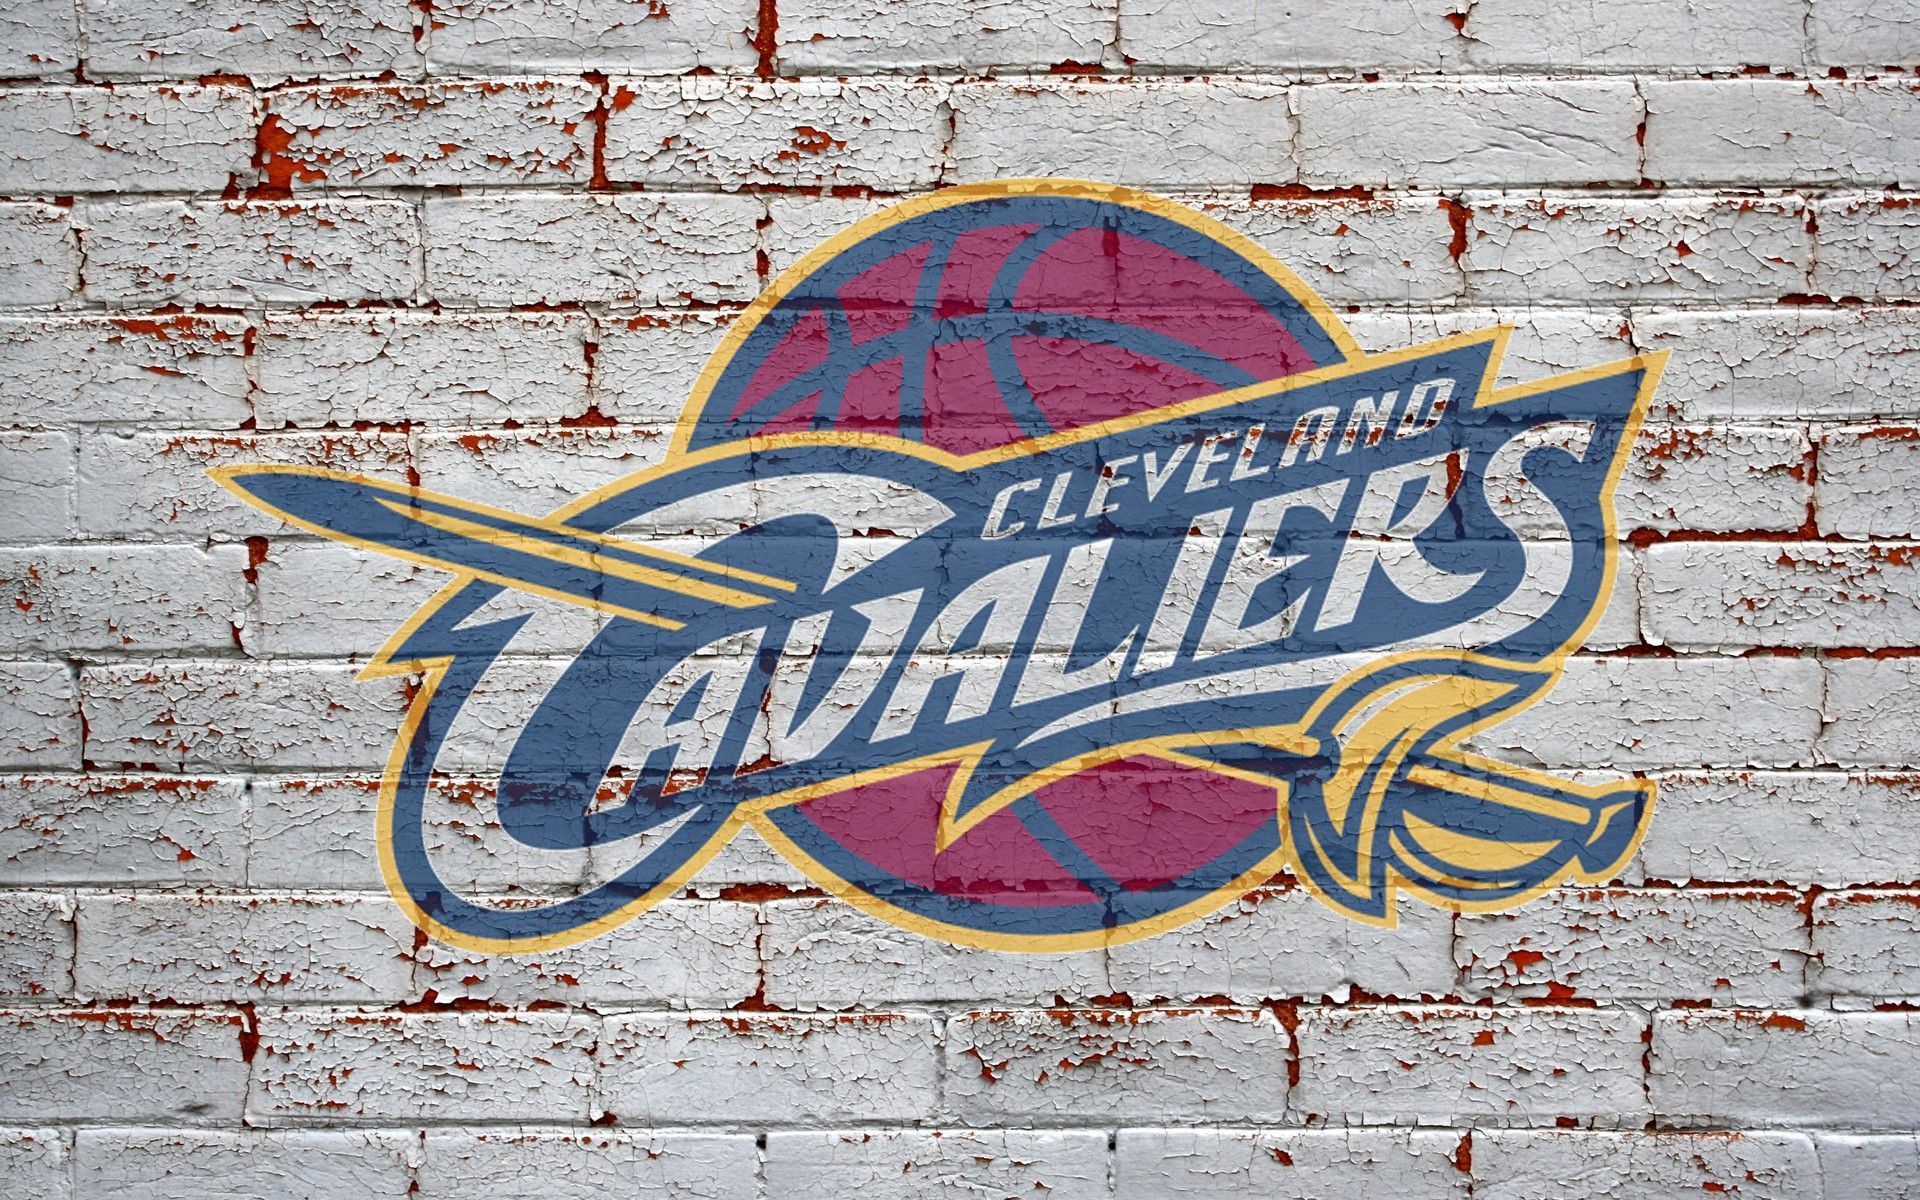 CLEVELAND CAVALIERS Nba Basketball team logo wallpaper Wallpapers HD